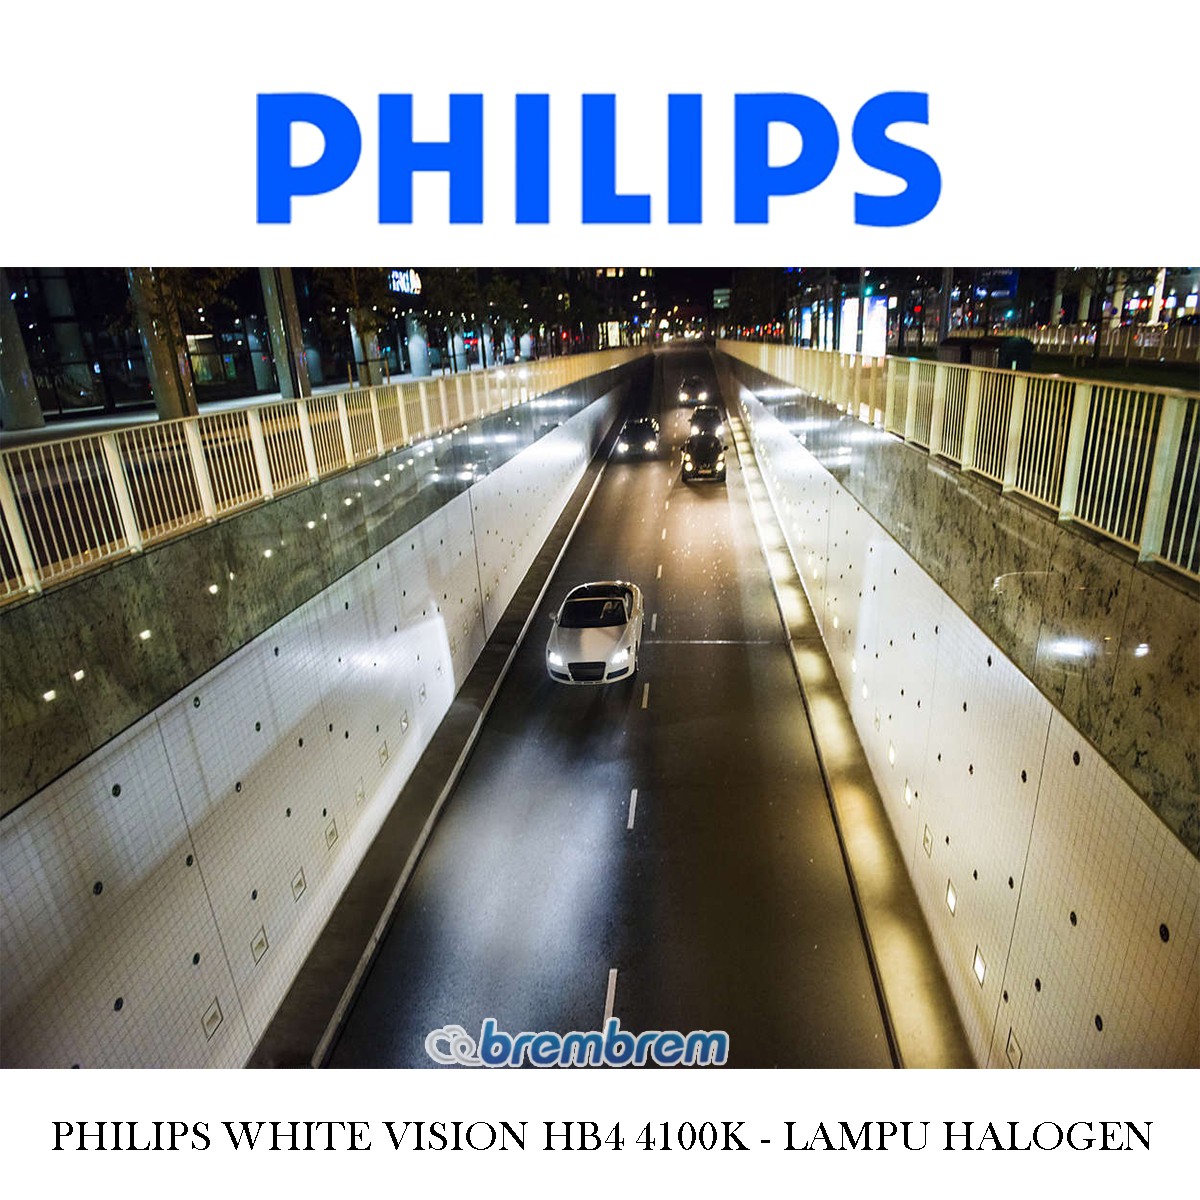 PHILIPS WHITE VISION HB4 (4100K) - LAMPU HALOGEN